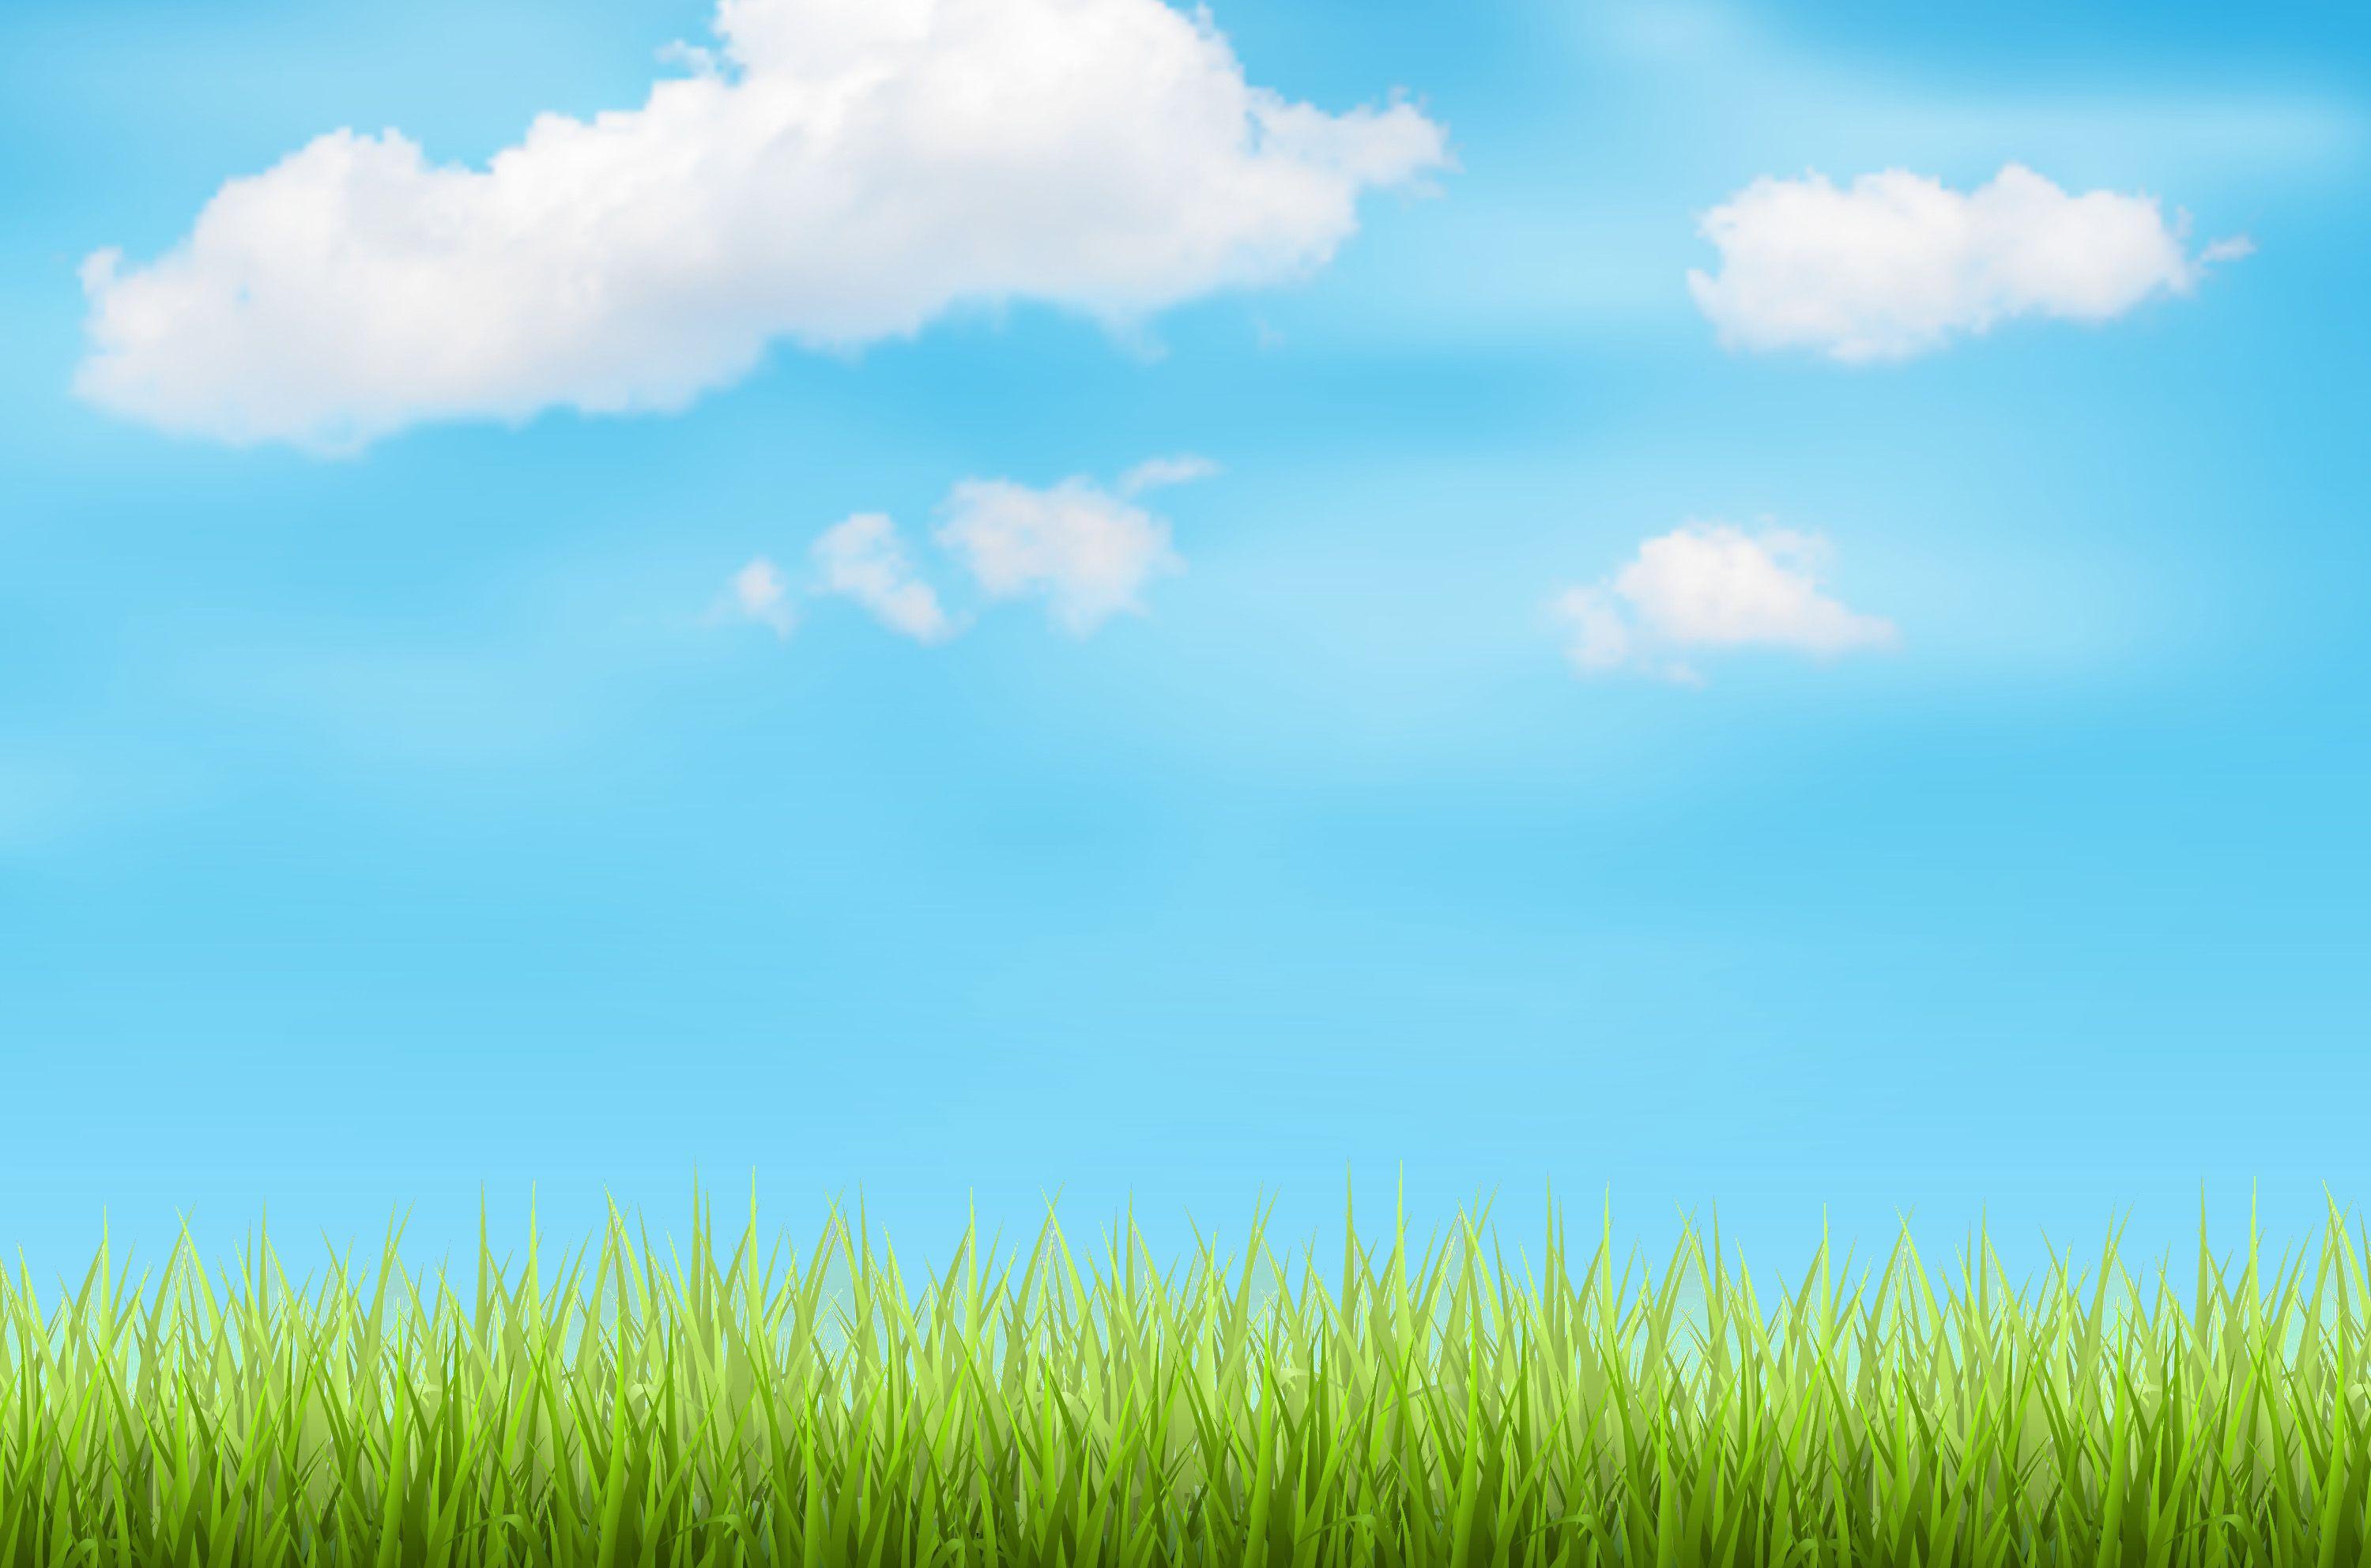 Top Header Grass & Sky Background JPG's Lawn Care